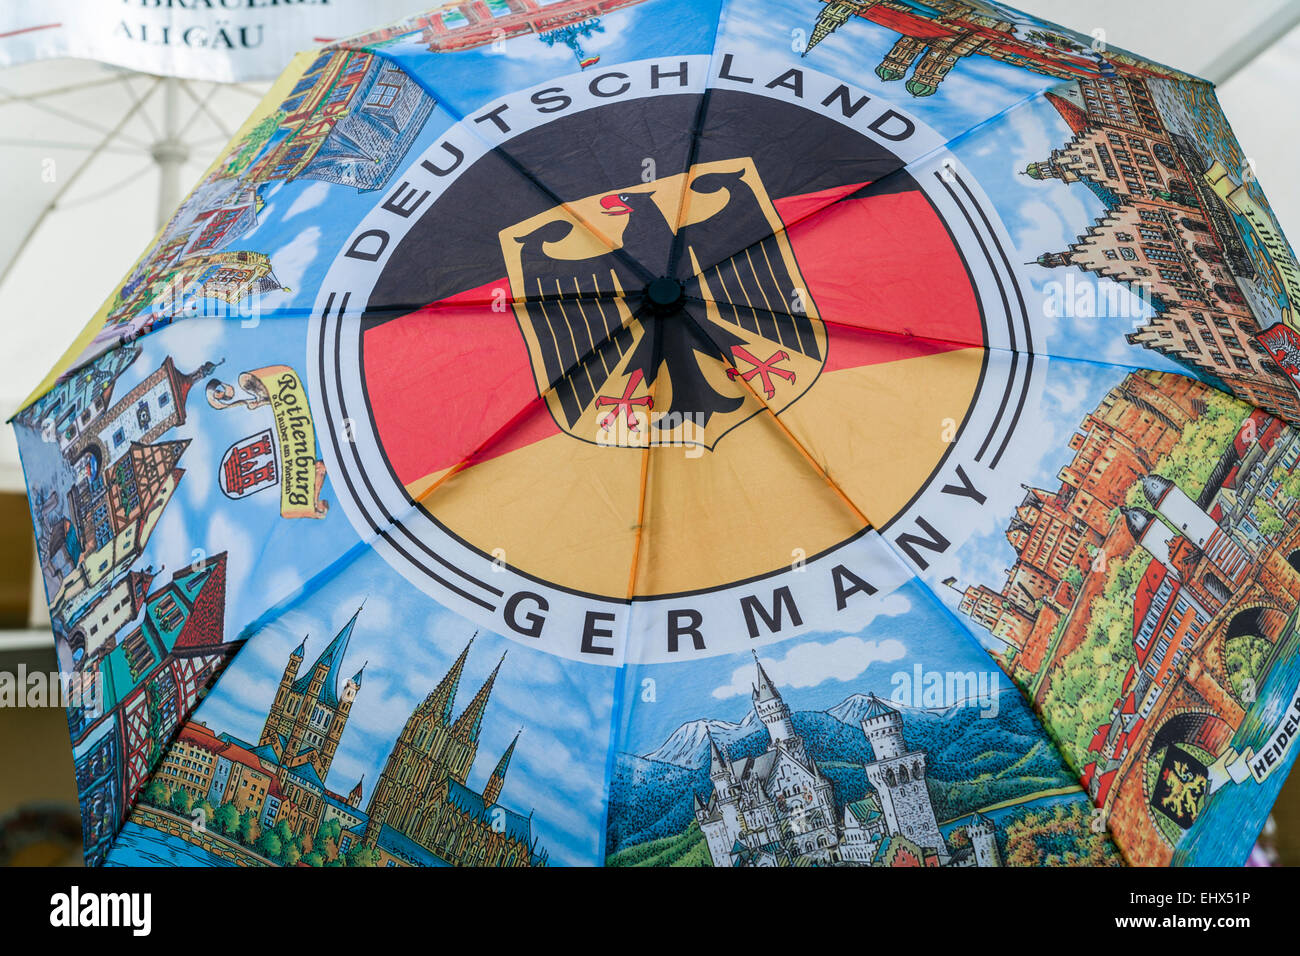 Germany, umbrella with representations of German landmarks Stock Photo